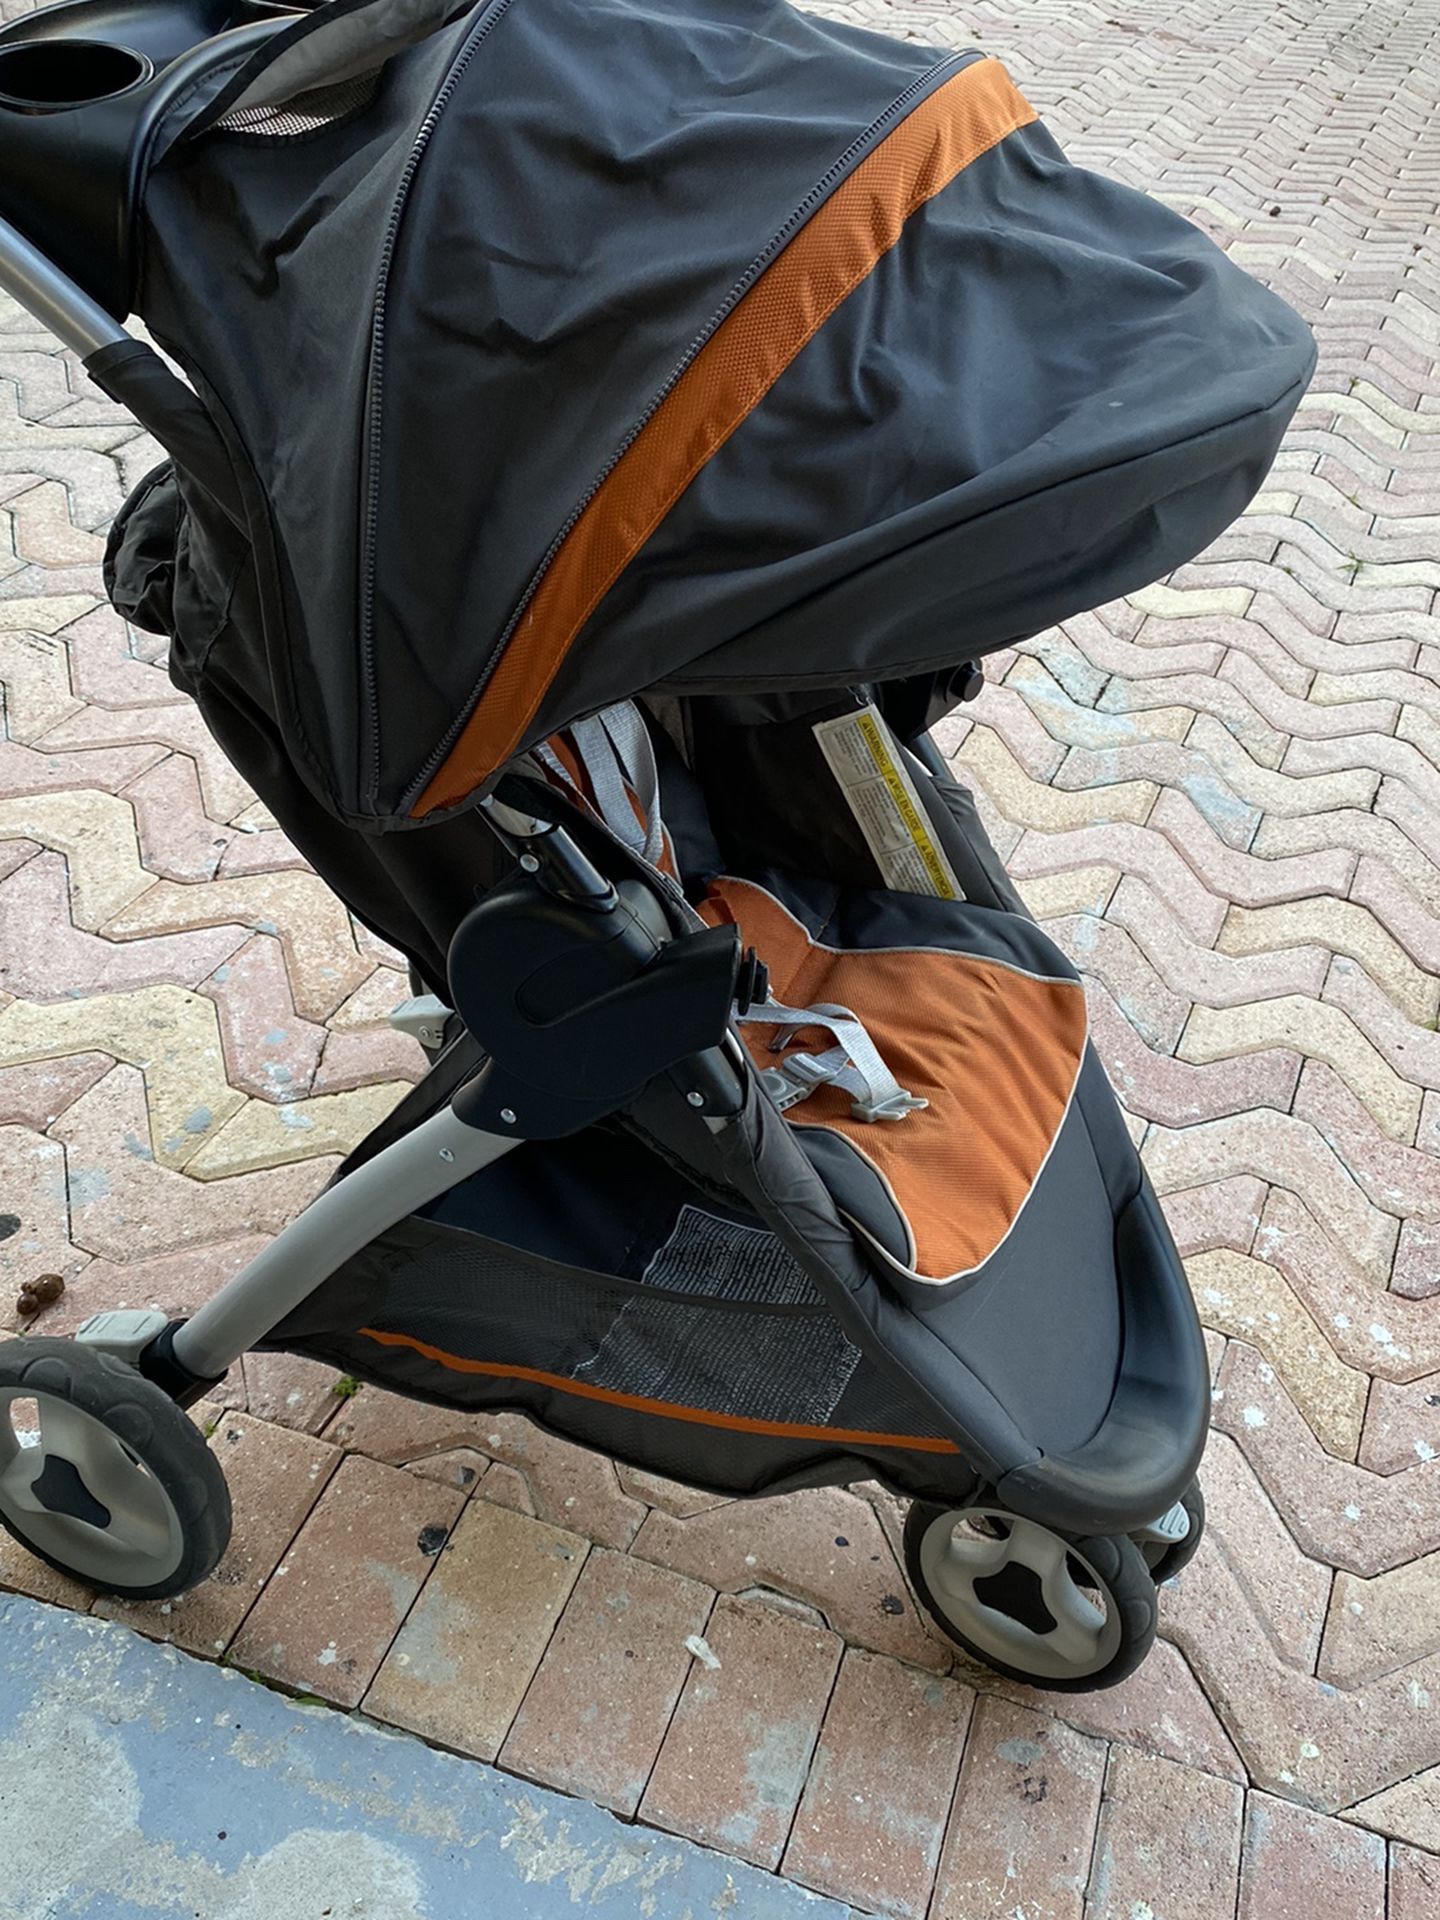 Free Orange And Grey Jogger Stroller